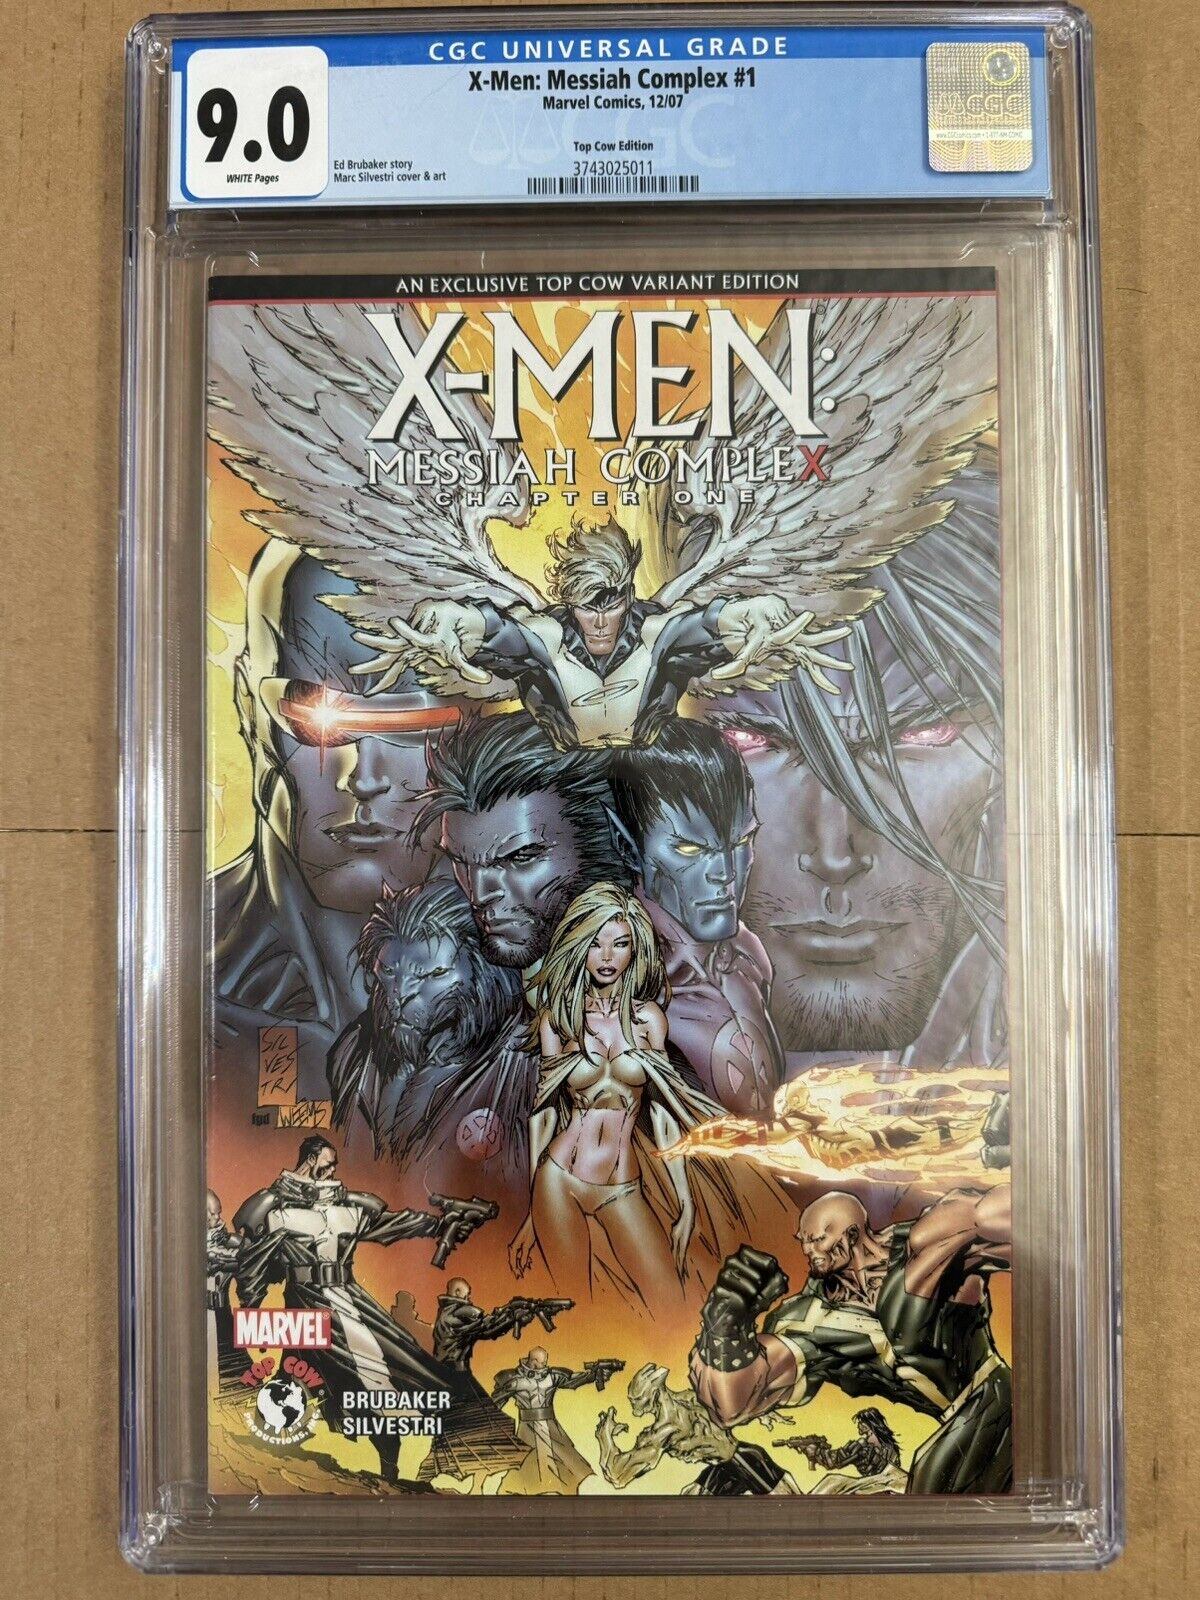 X-Men: Messiah Complex #1 Top Cow Edition Marc Silvestri cover & art CGC 9.0